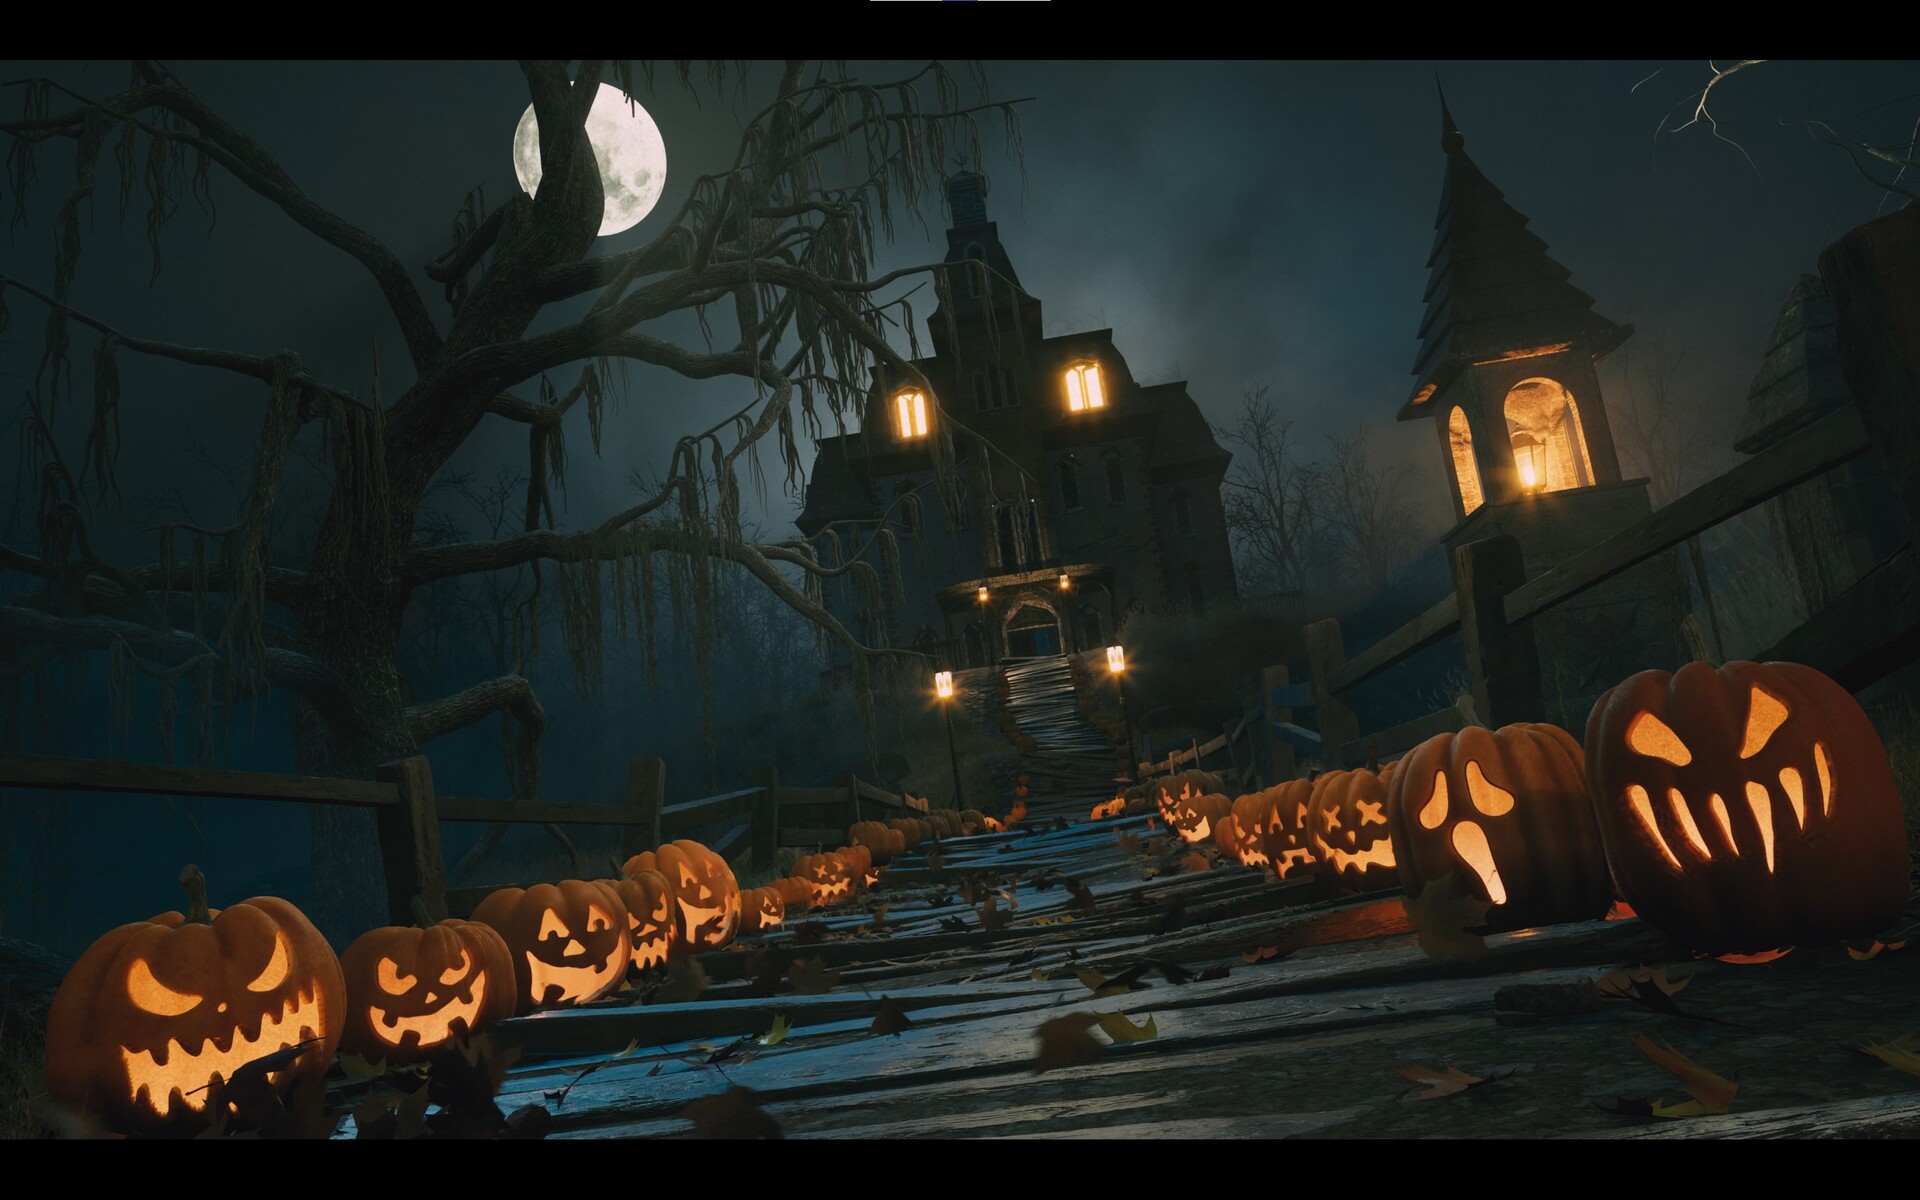 ArtStation - Spooky Halloween Scene - Unreal Engine